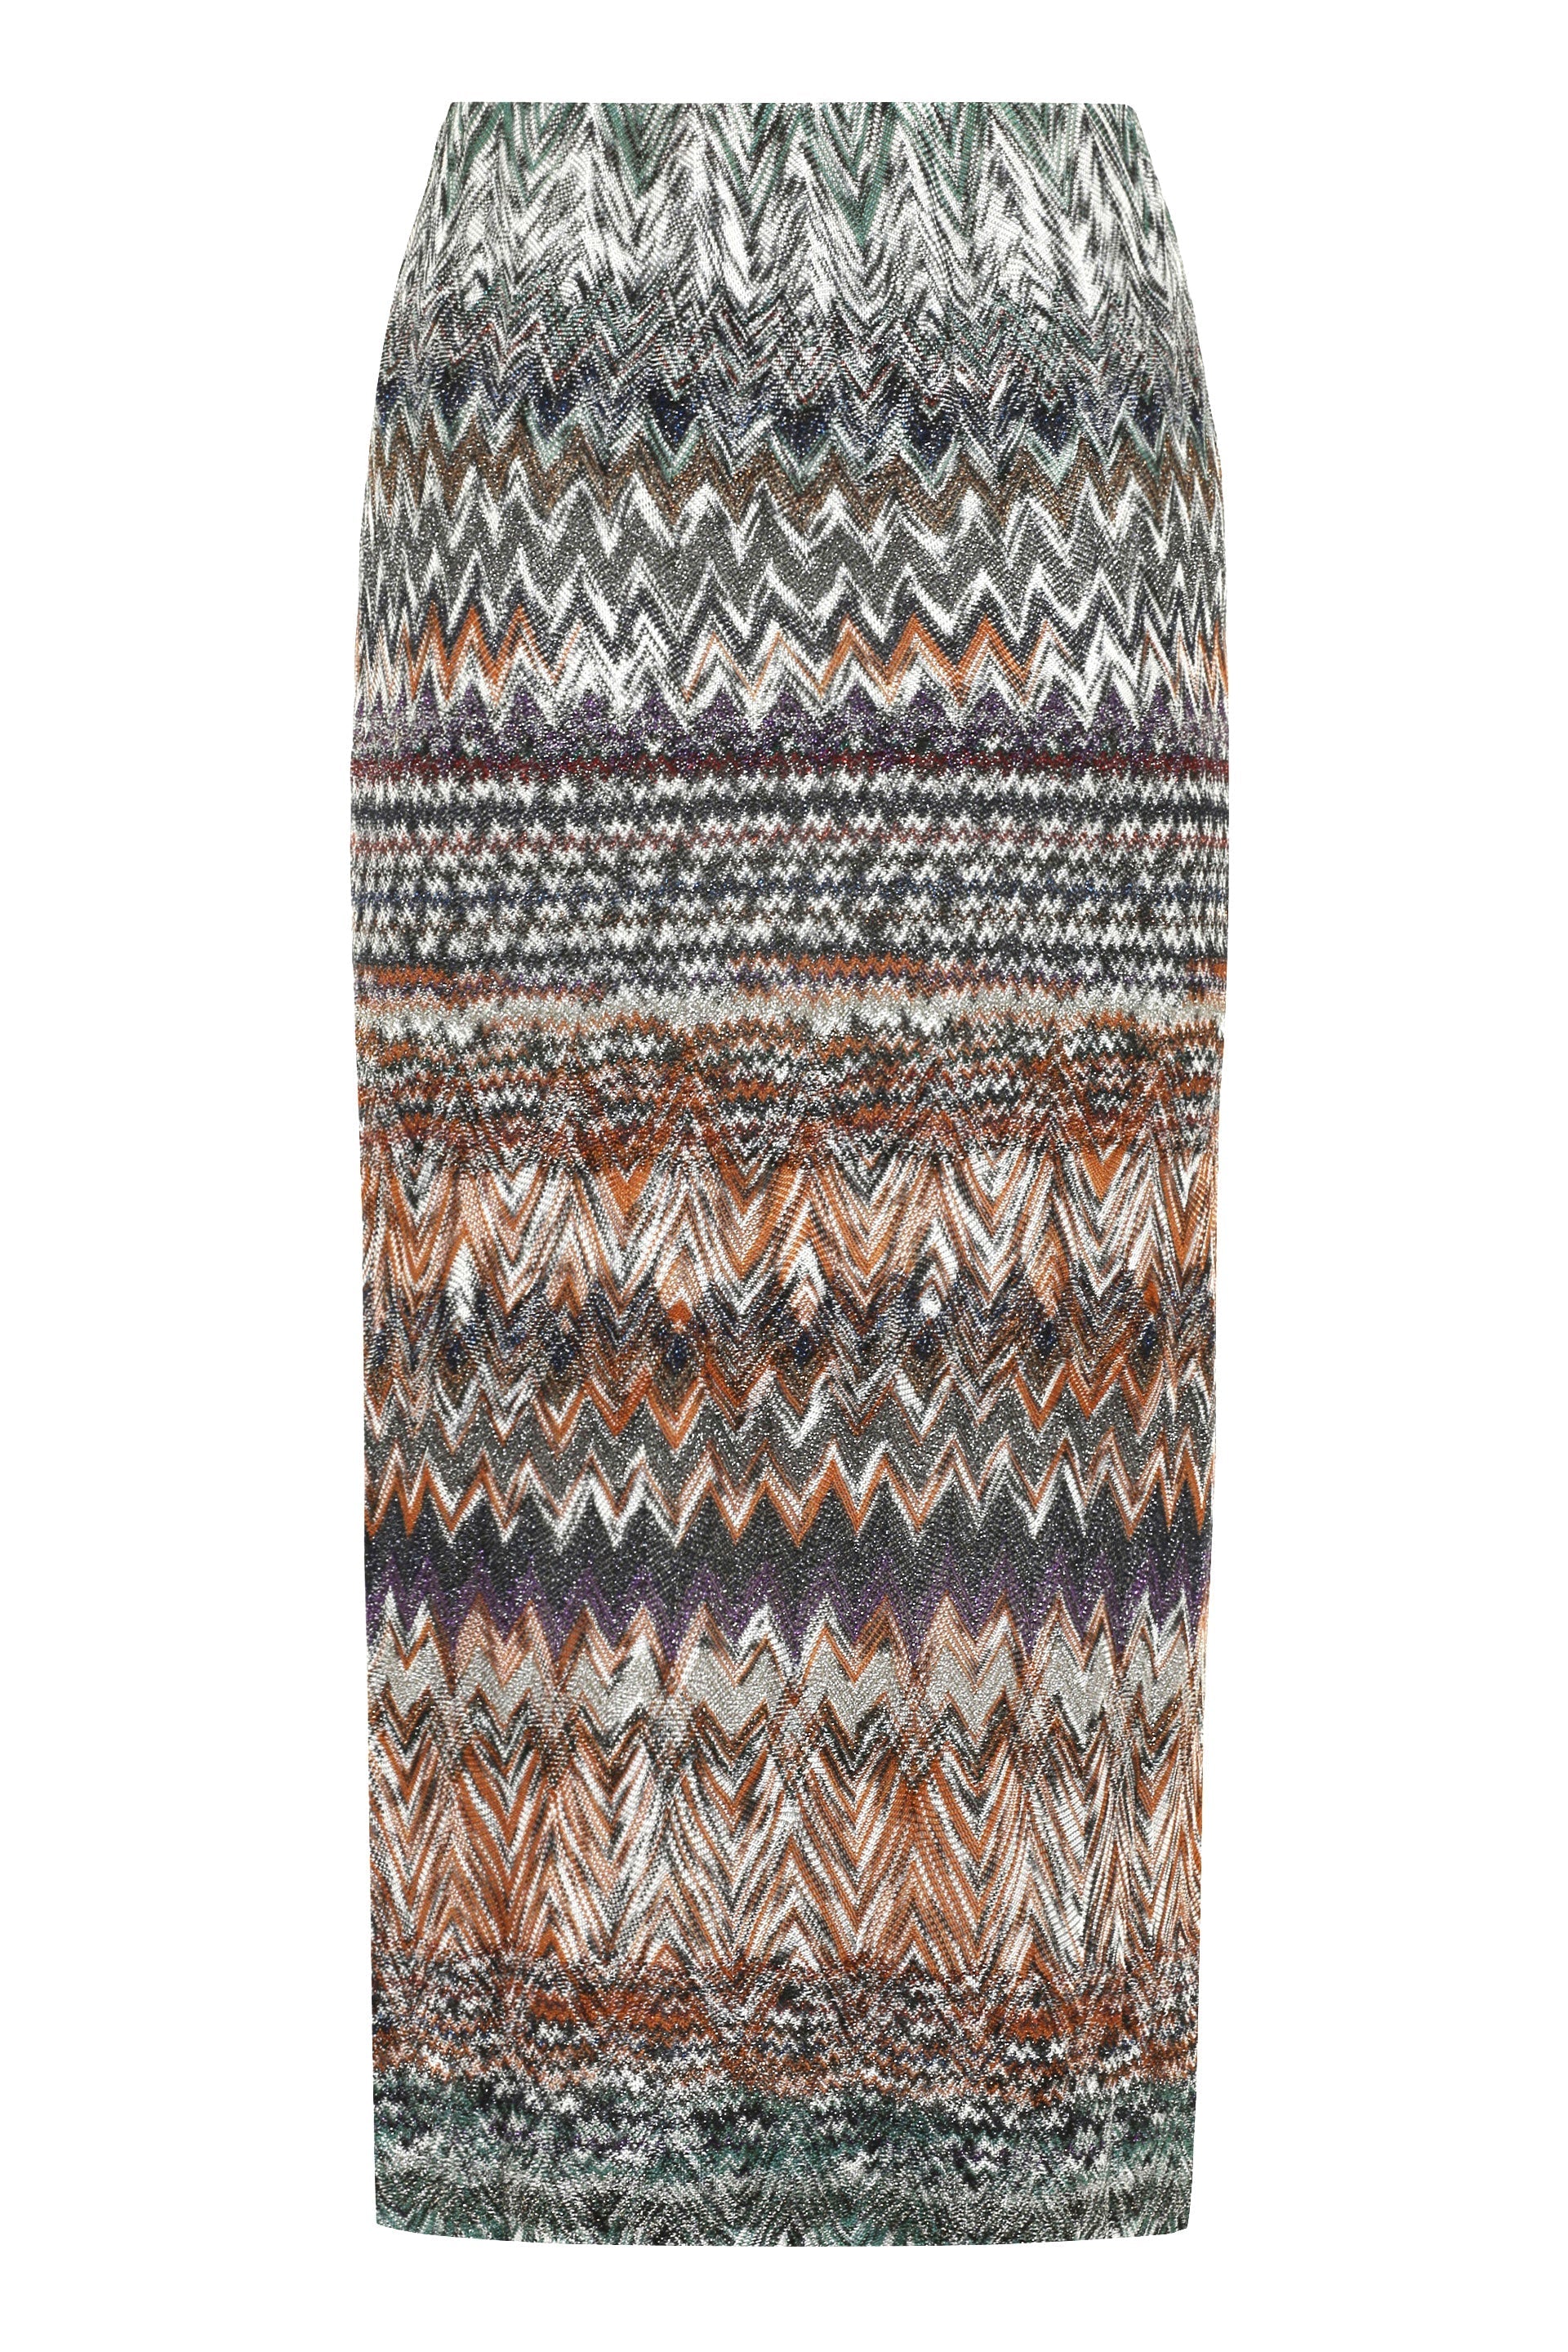 Chevron motif knitted skirt-Missoni-OUTLET-SALE-44-ARCHIVIST